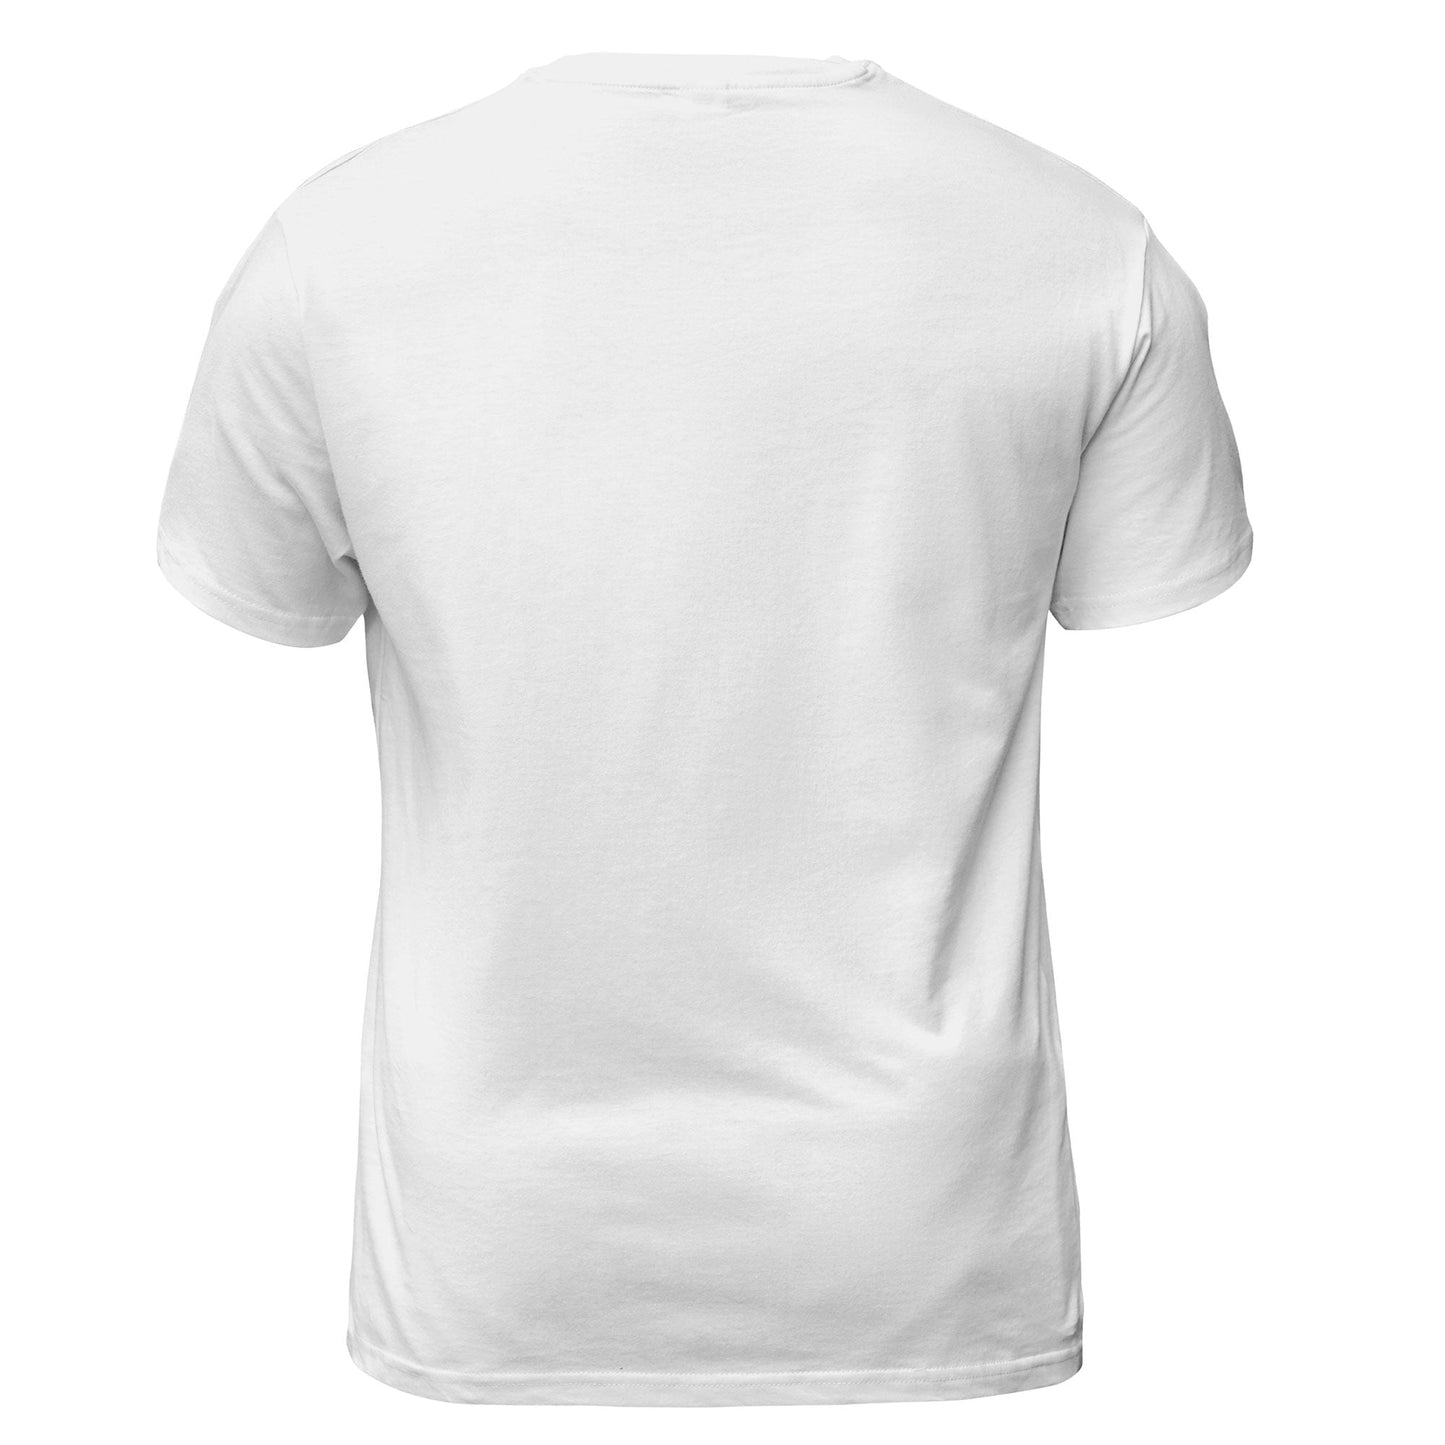 Shiba Inu - 3D Graphic T-Shirt